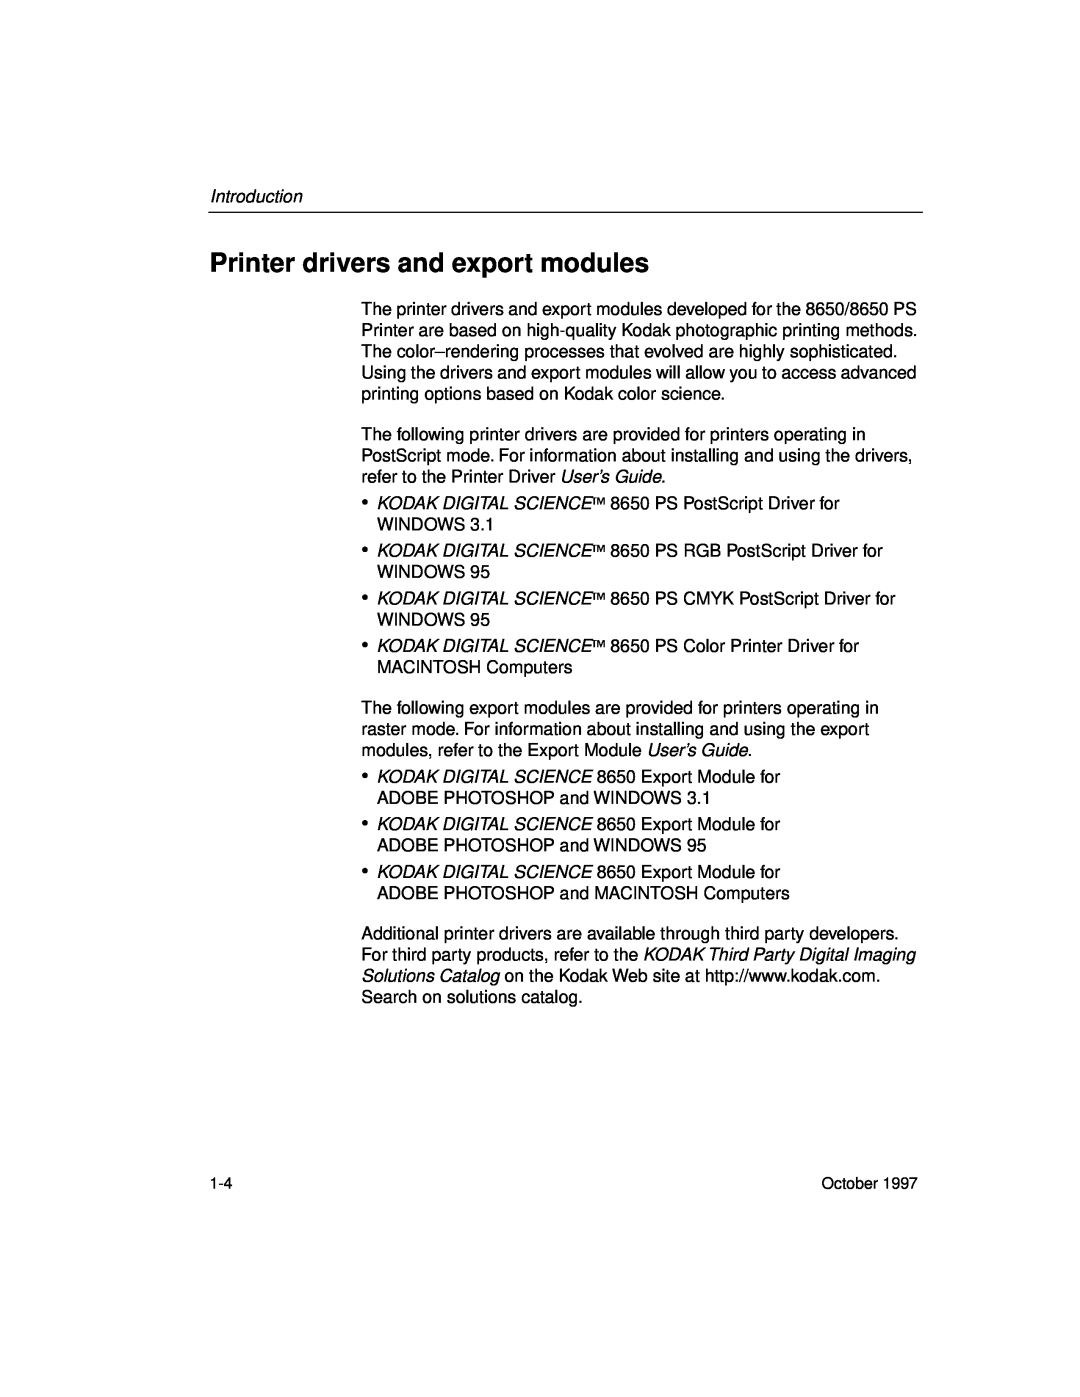 Kodak 8650 manual Printer drivers and export modules, Introduction 